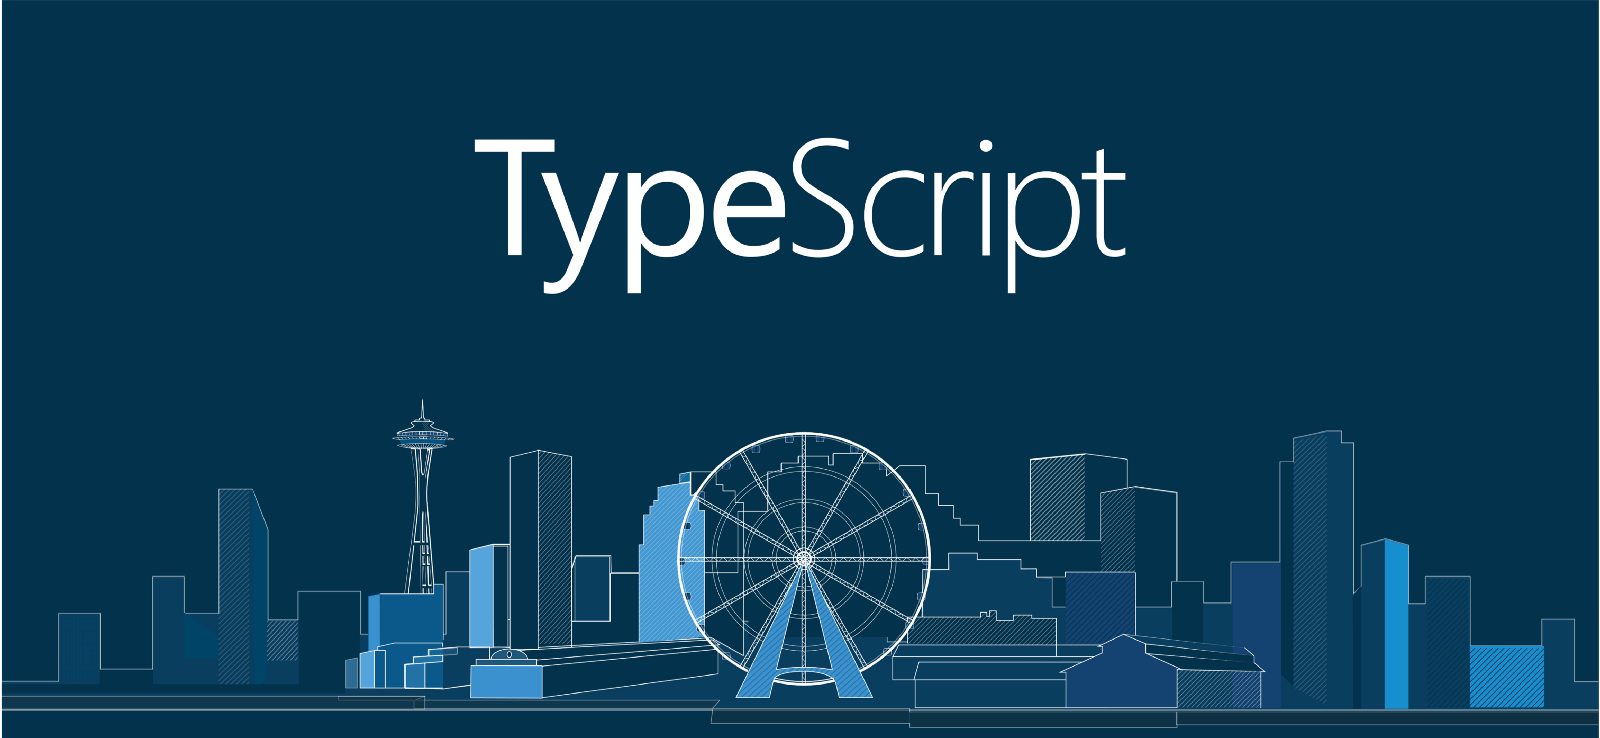 TypeScript Logo - TypeScript